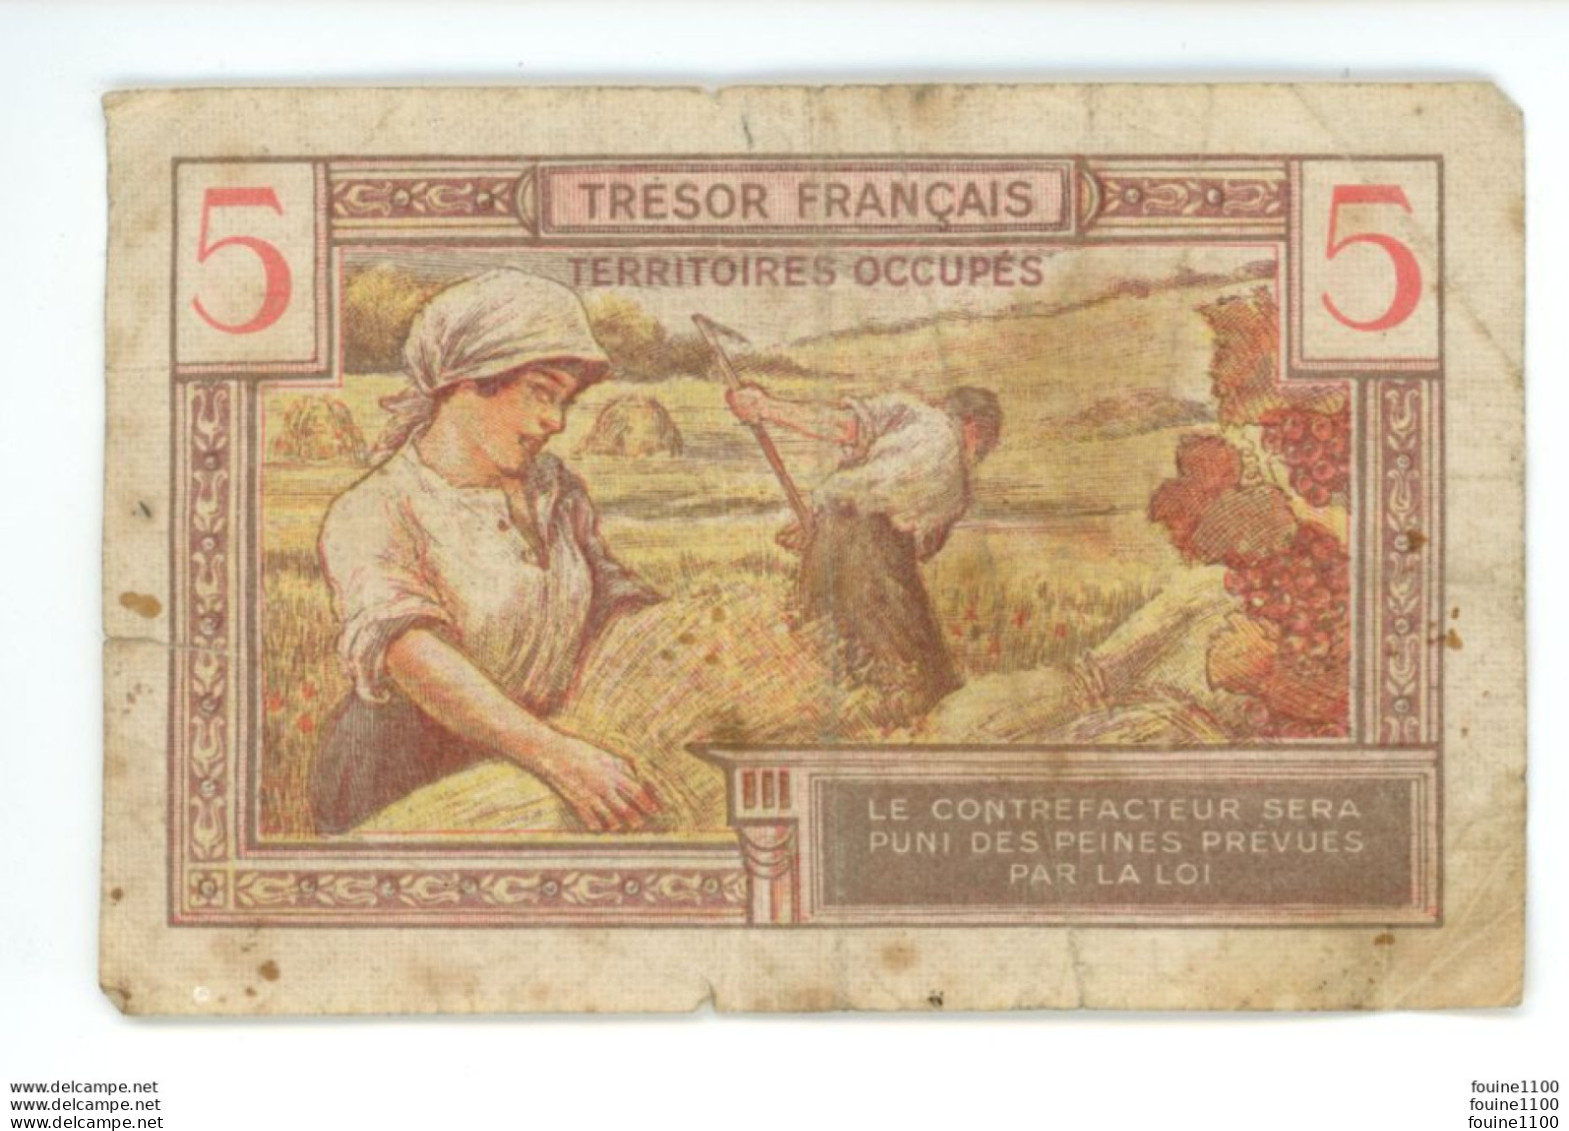 Billet , FRANCE , 5 Francs , Cinq , TRESOR FRANCAIS , Territoires Occupés - 1947 French Treasury